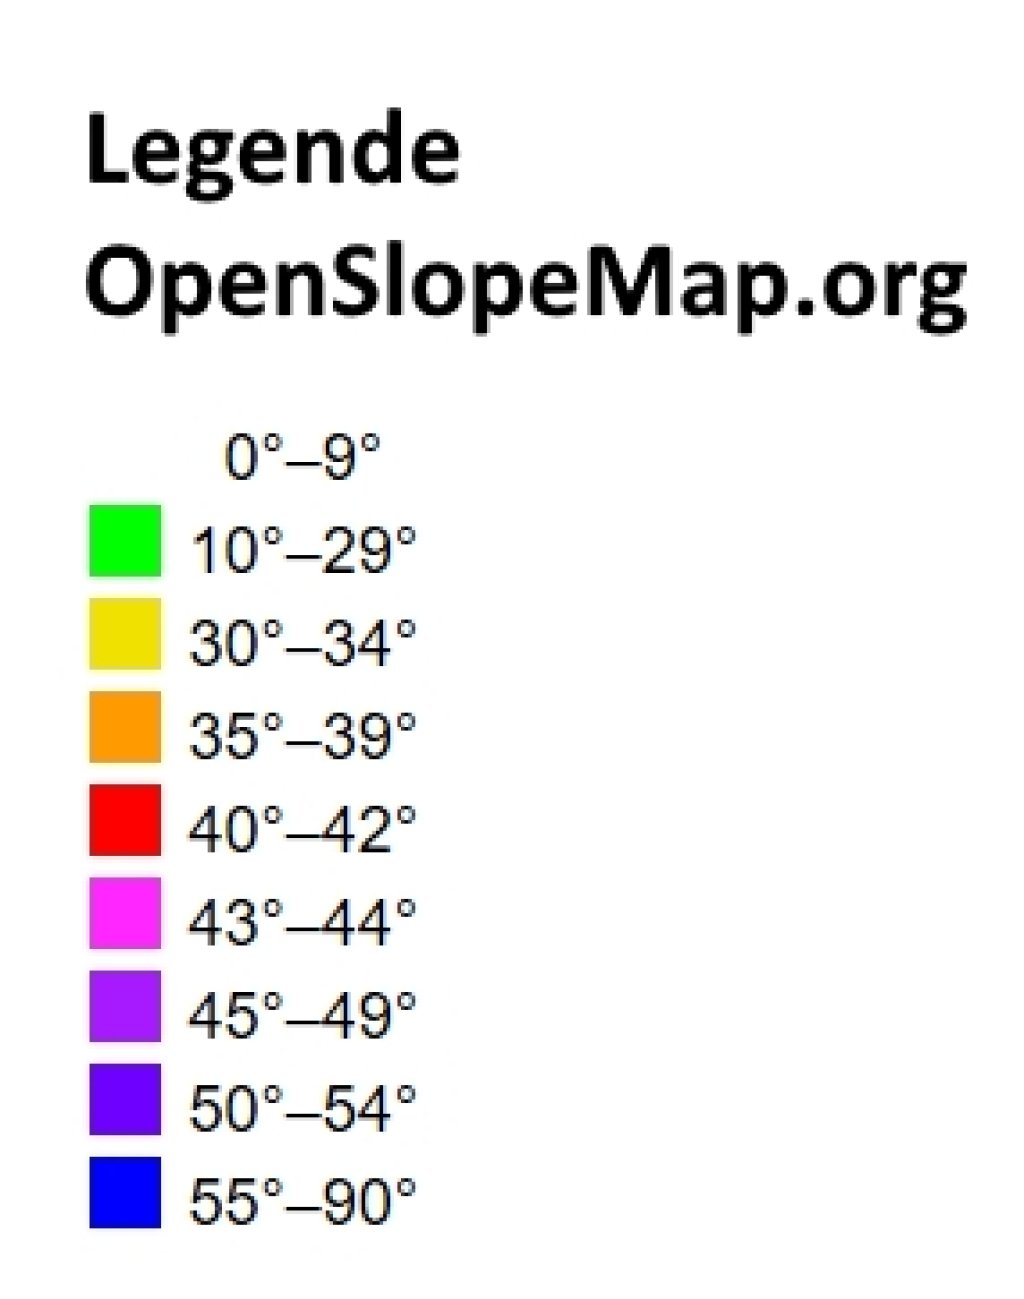 Slope legend of the Openslopemap